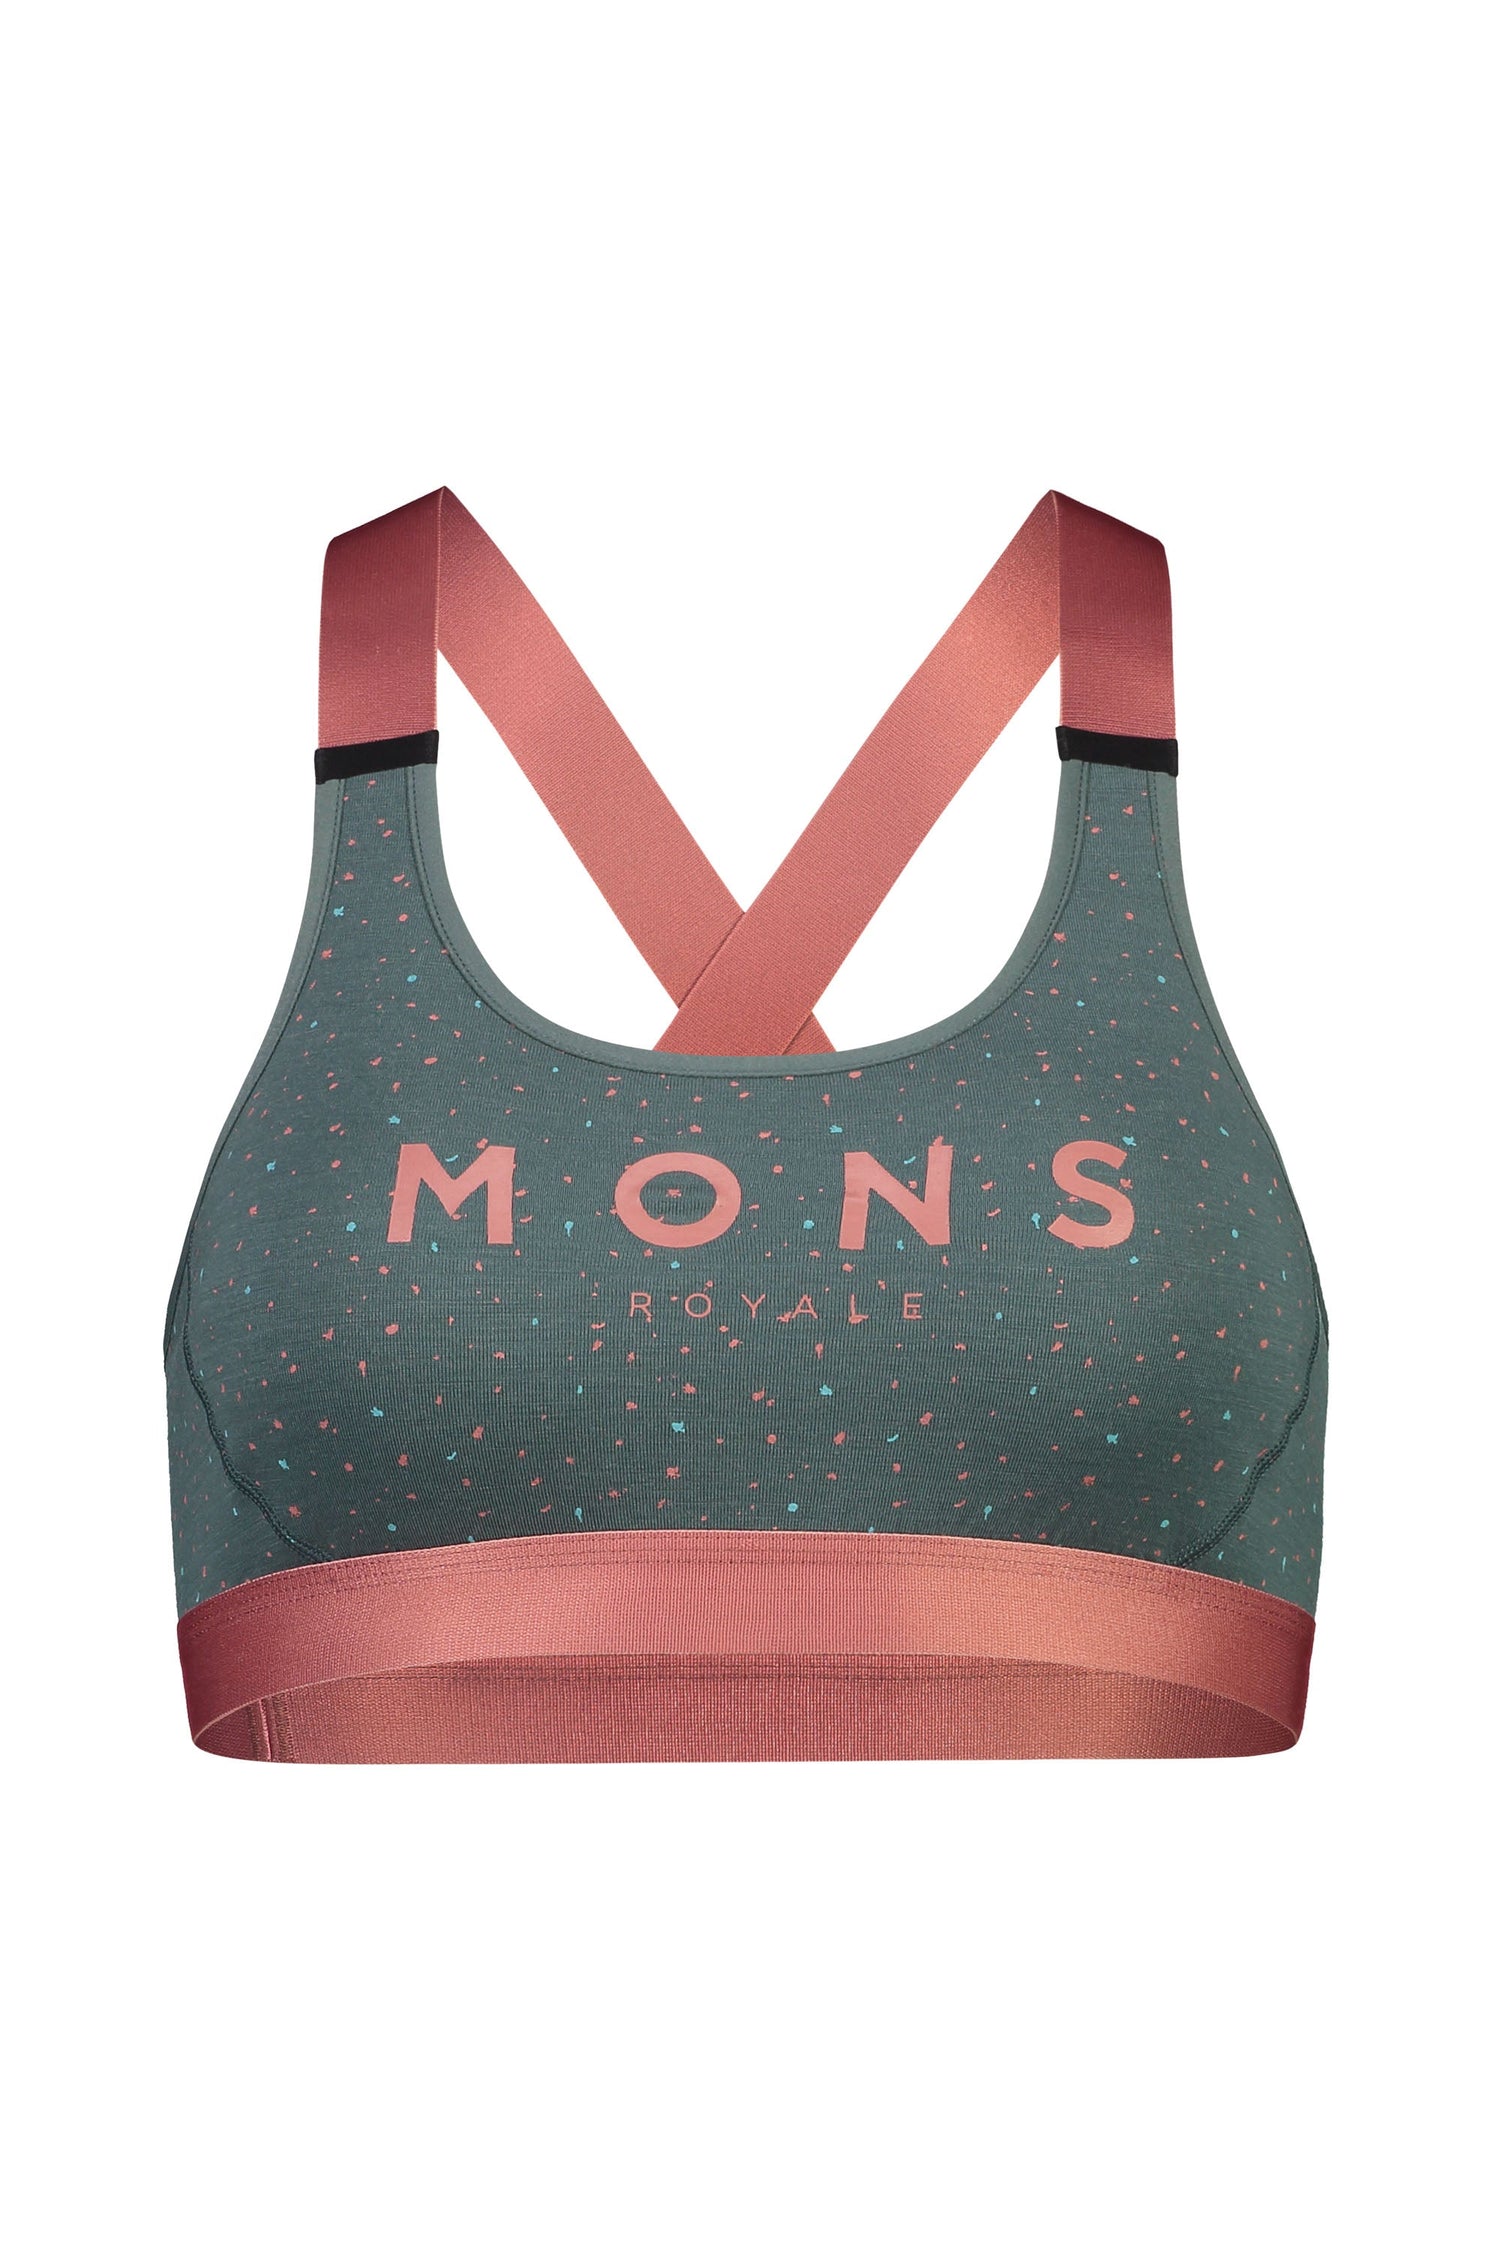 Mons Royale - Stella X-Back Bra - Merino Wool - Weekendbee - sustainable sportswear